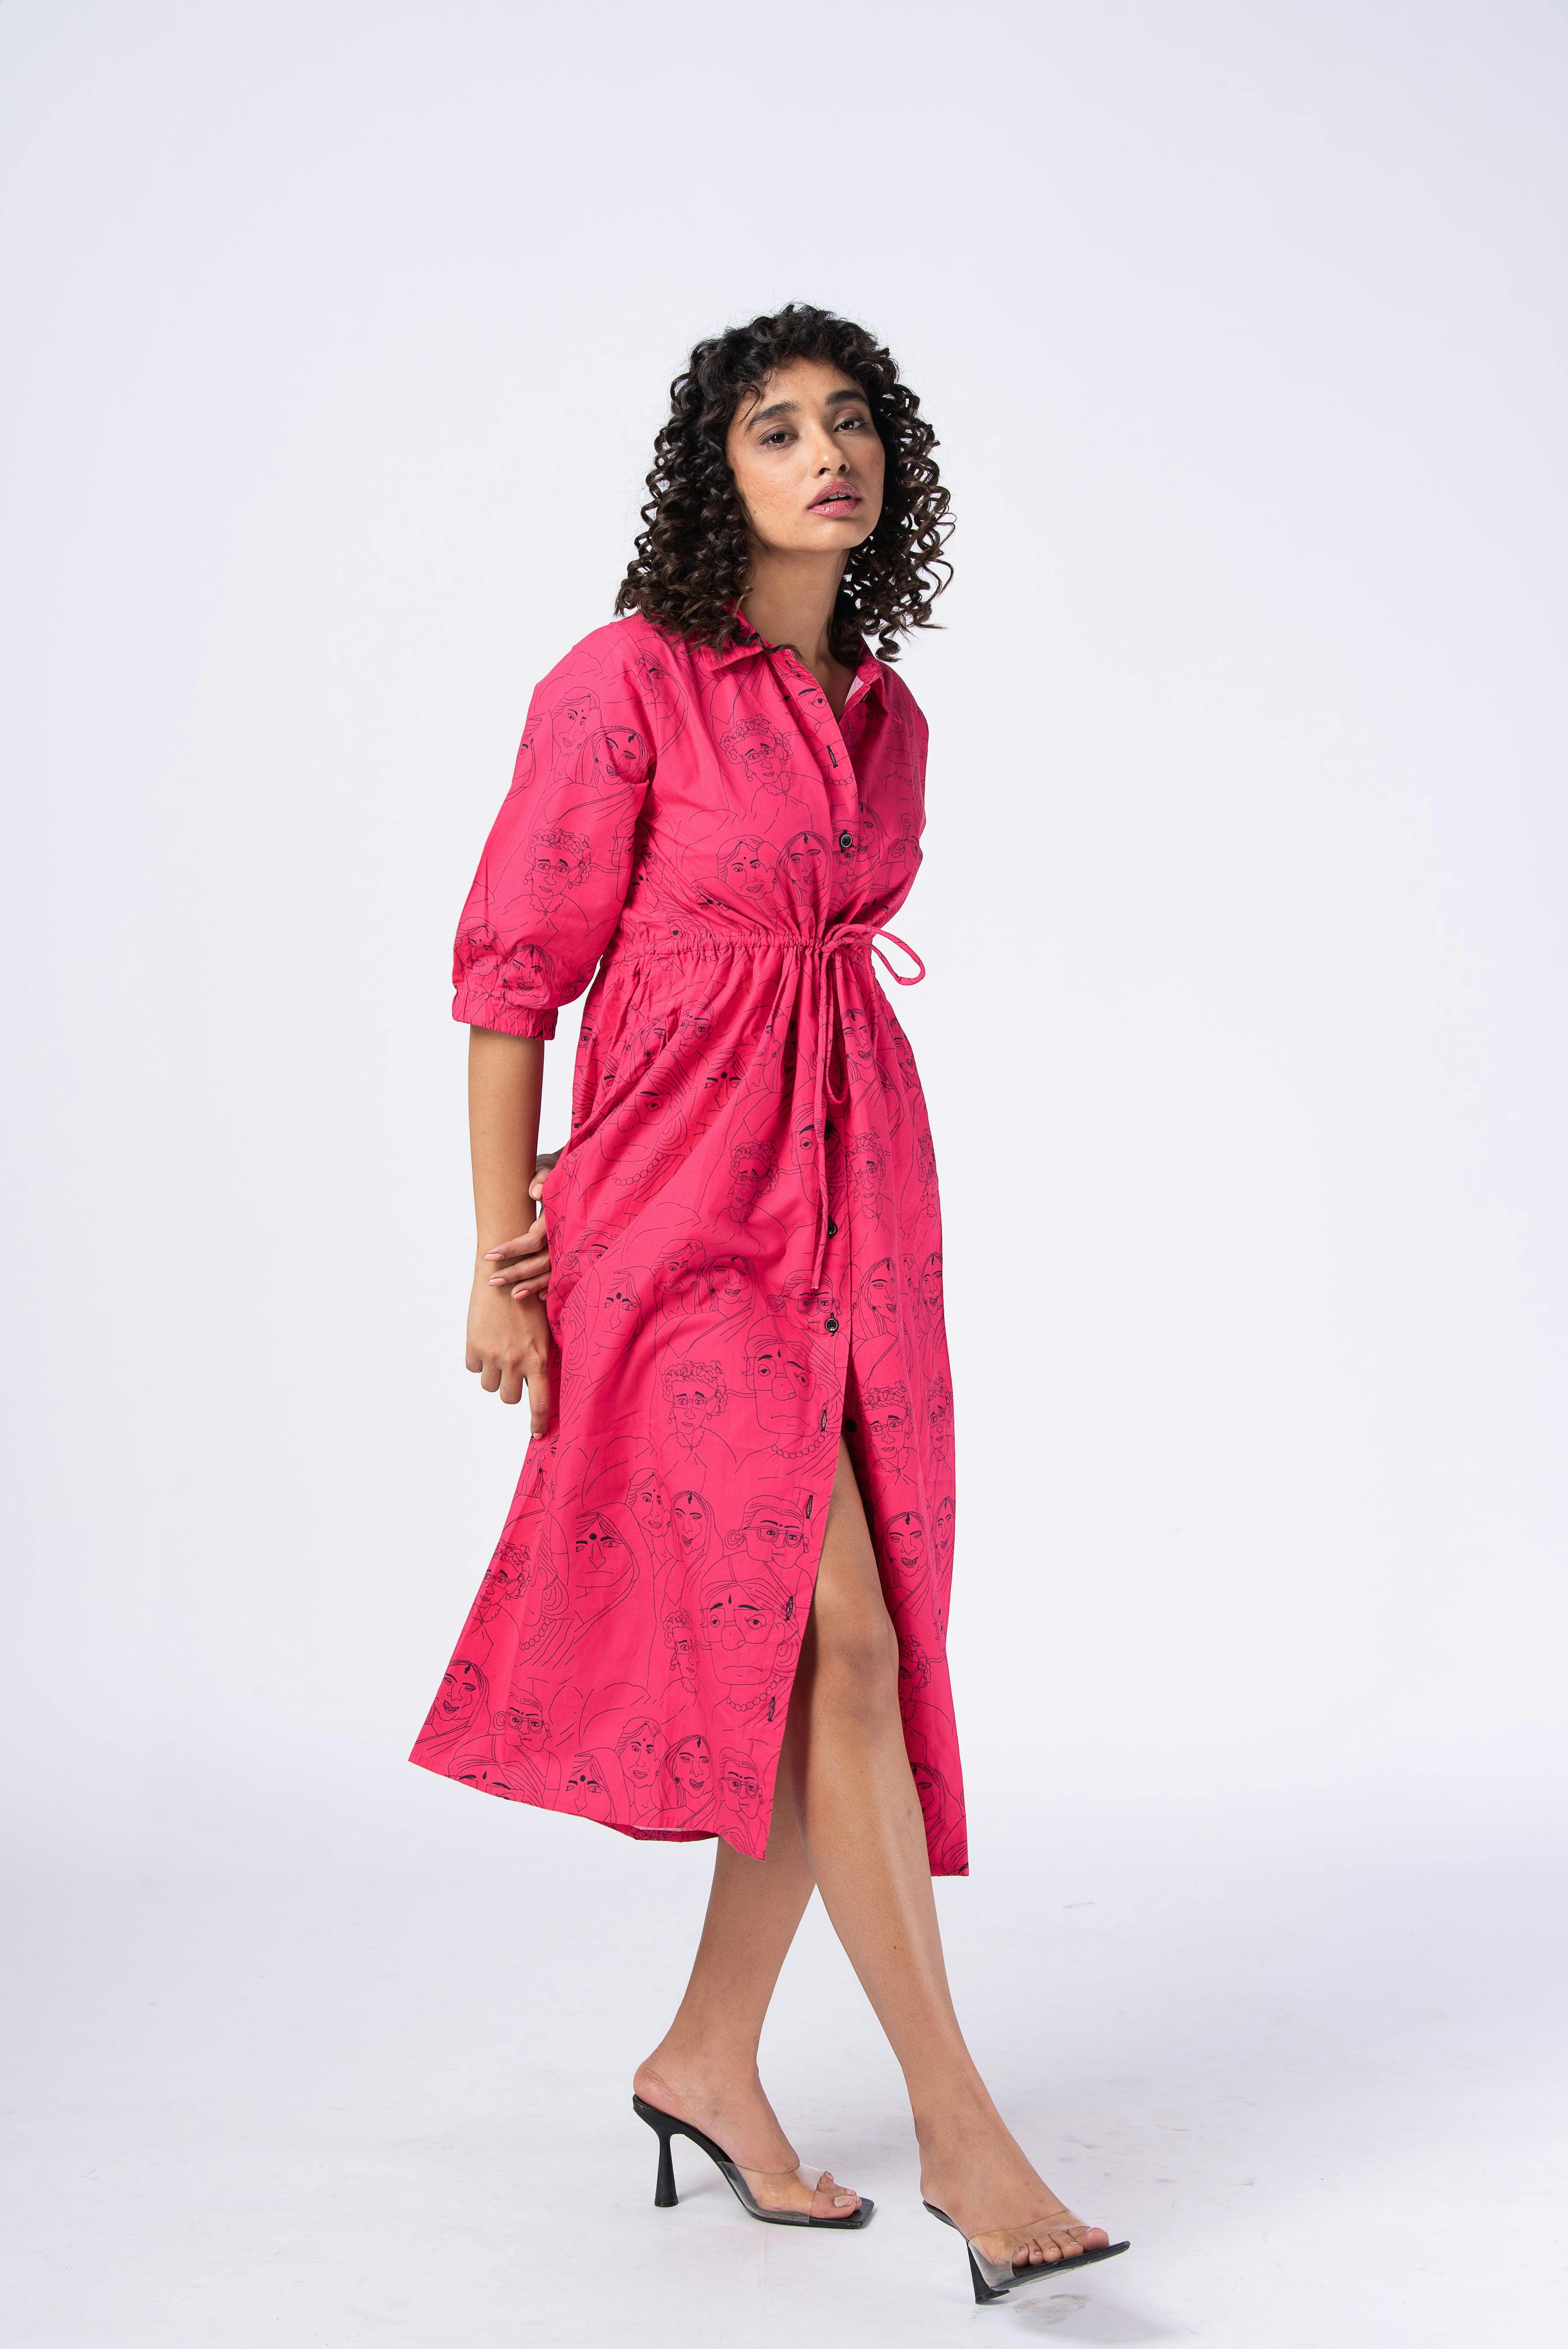 Hello ladies [midi dress], a product by Radharaman